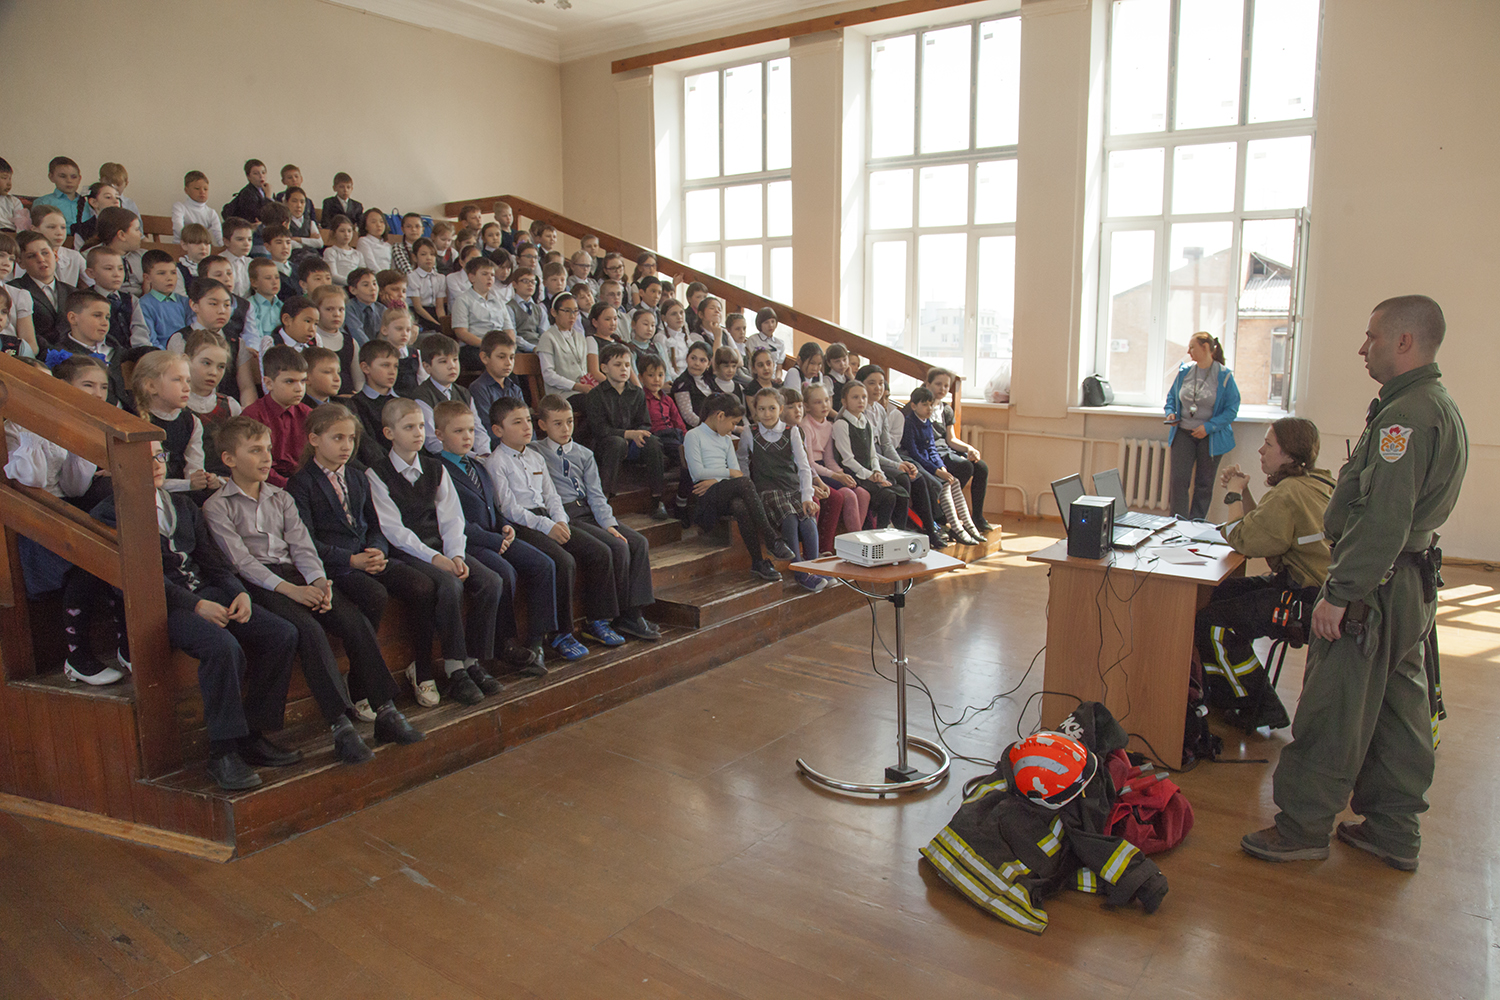 Противопожарное занятие в школе. Фото © Мария Васильева / Greenpeace